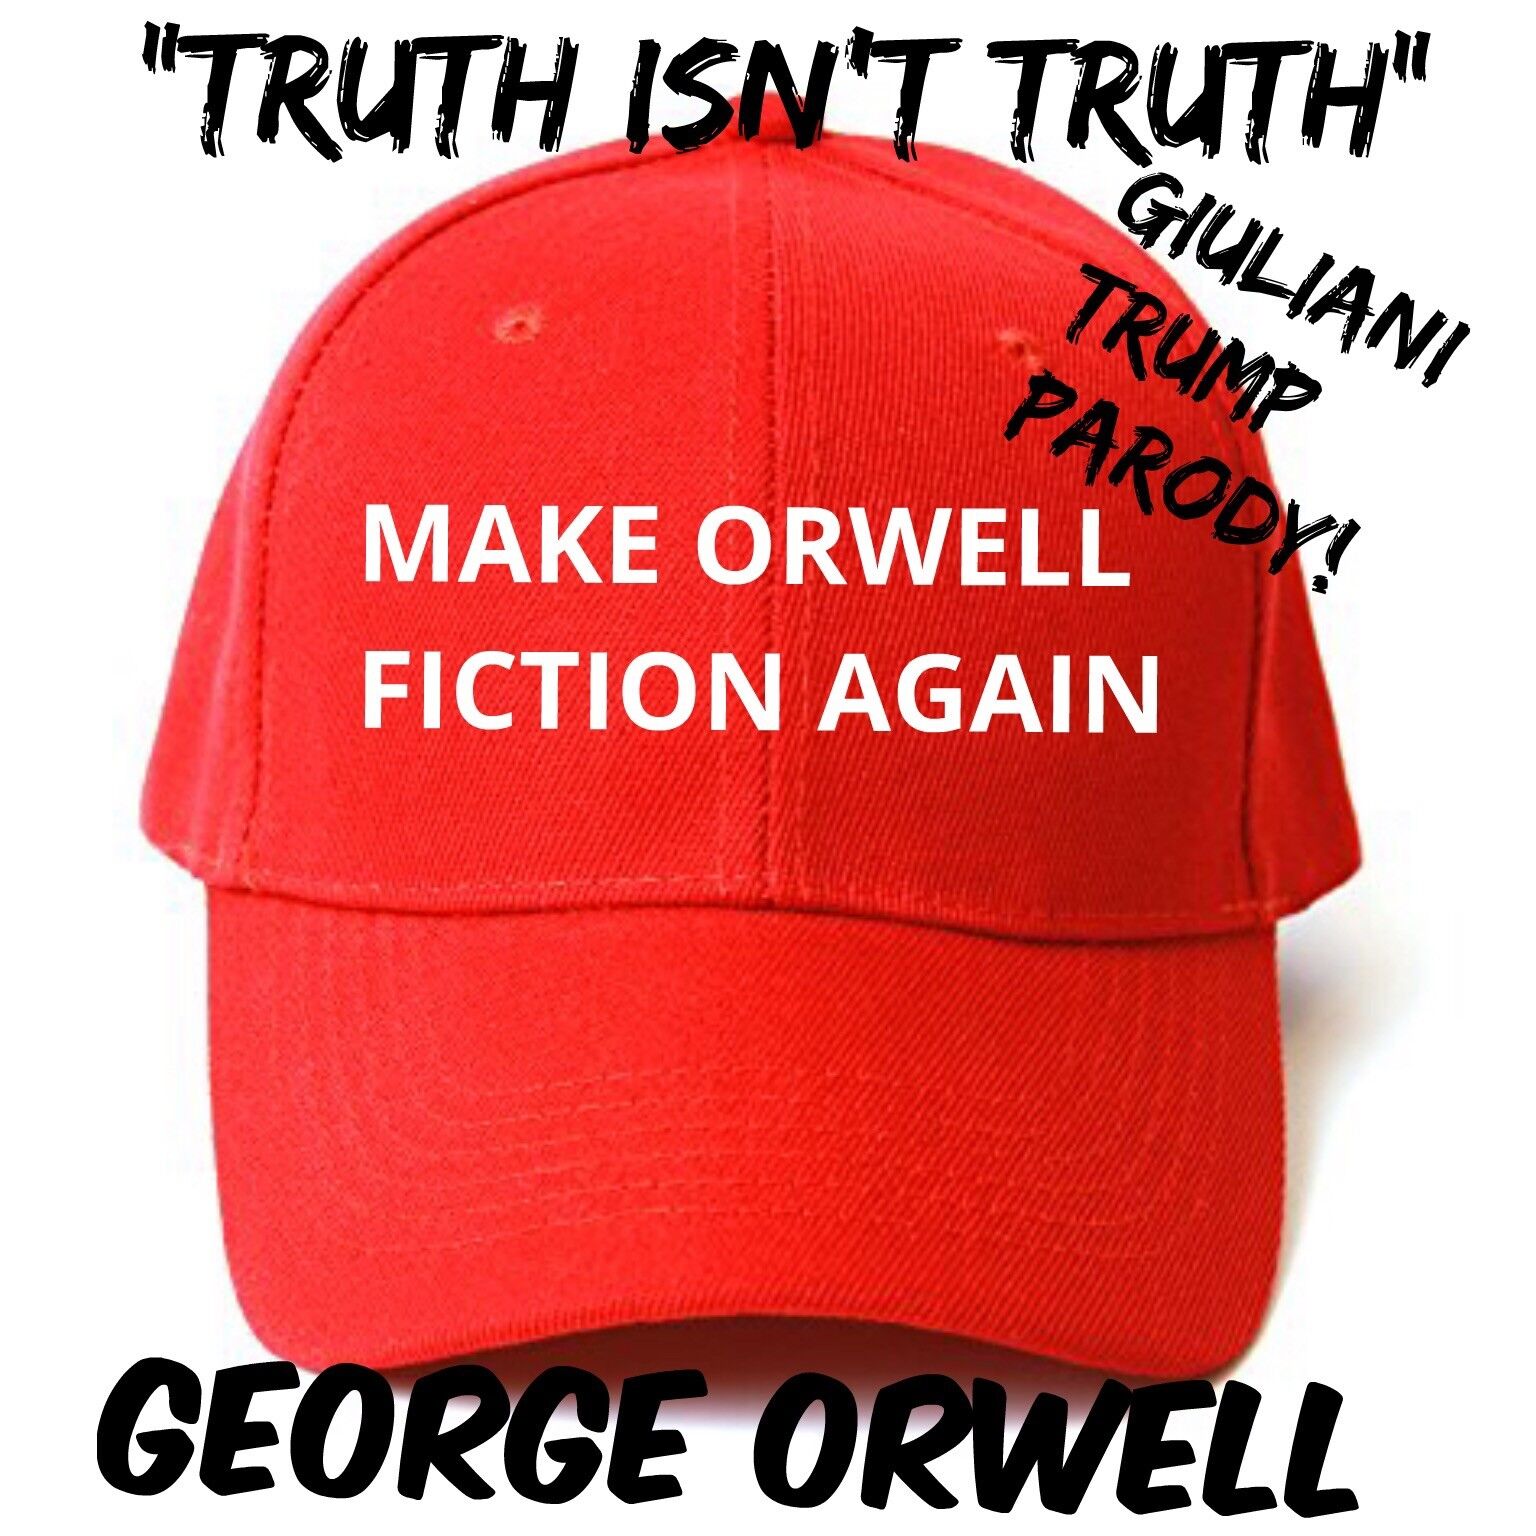 MAKE ORWELL FICTION AGAIN Rudy Giuliani TRUMP Parody EMBROIDERED George Orwell